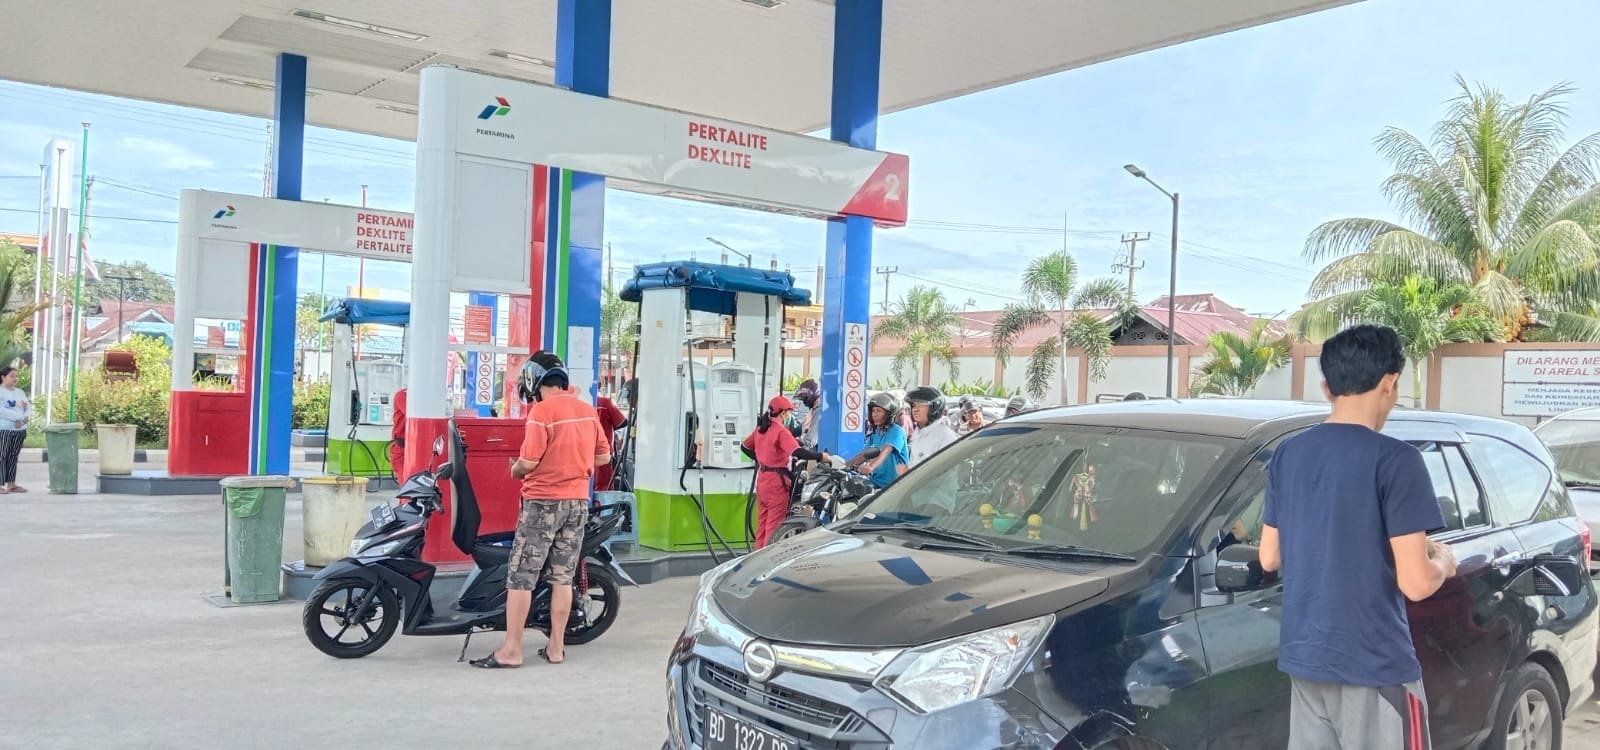 Alokasi Pertalite di Bengkulu Ditambah, Mobil dan Motor Jenis Ini Tetap akan Dilarang Gunakan BBM Penugasan